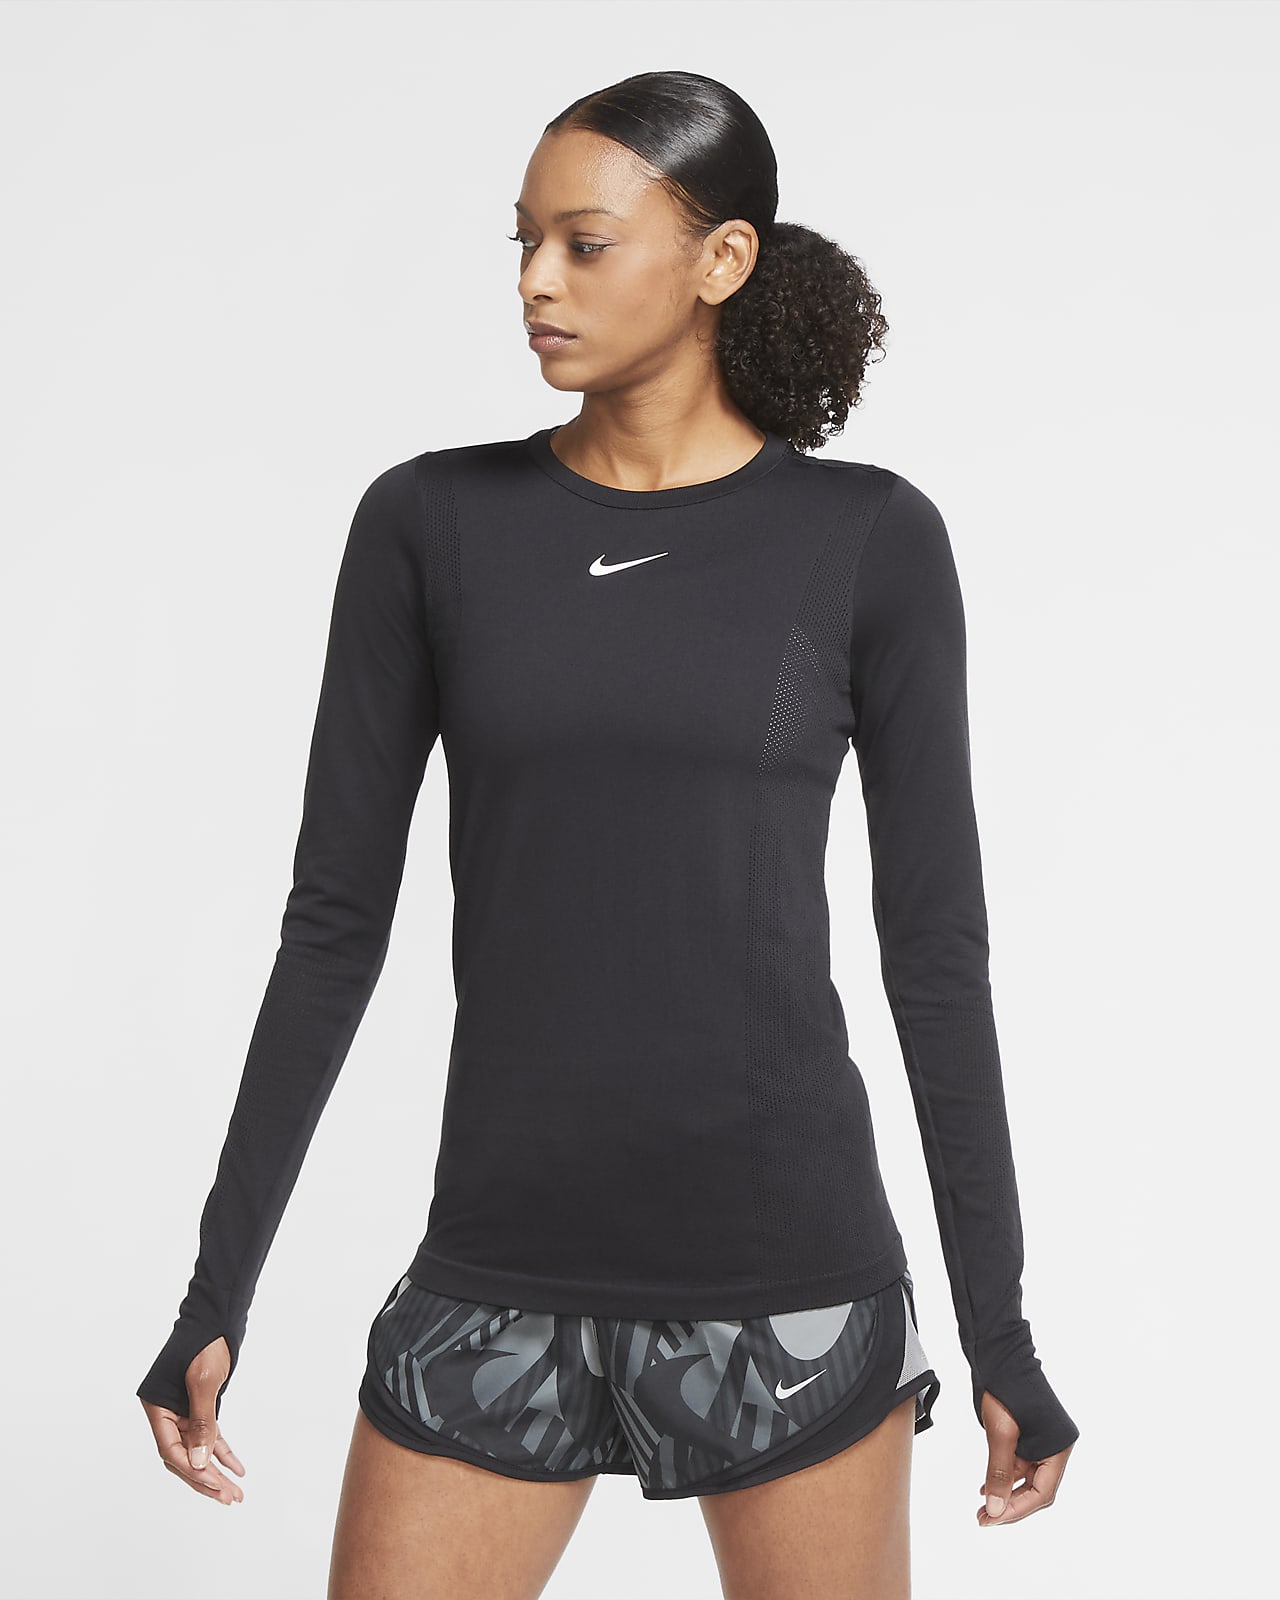 Long-Sleeve Running Top. Nike 